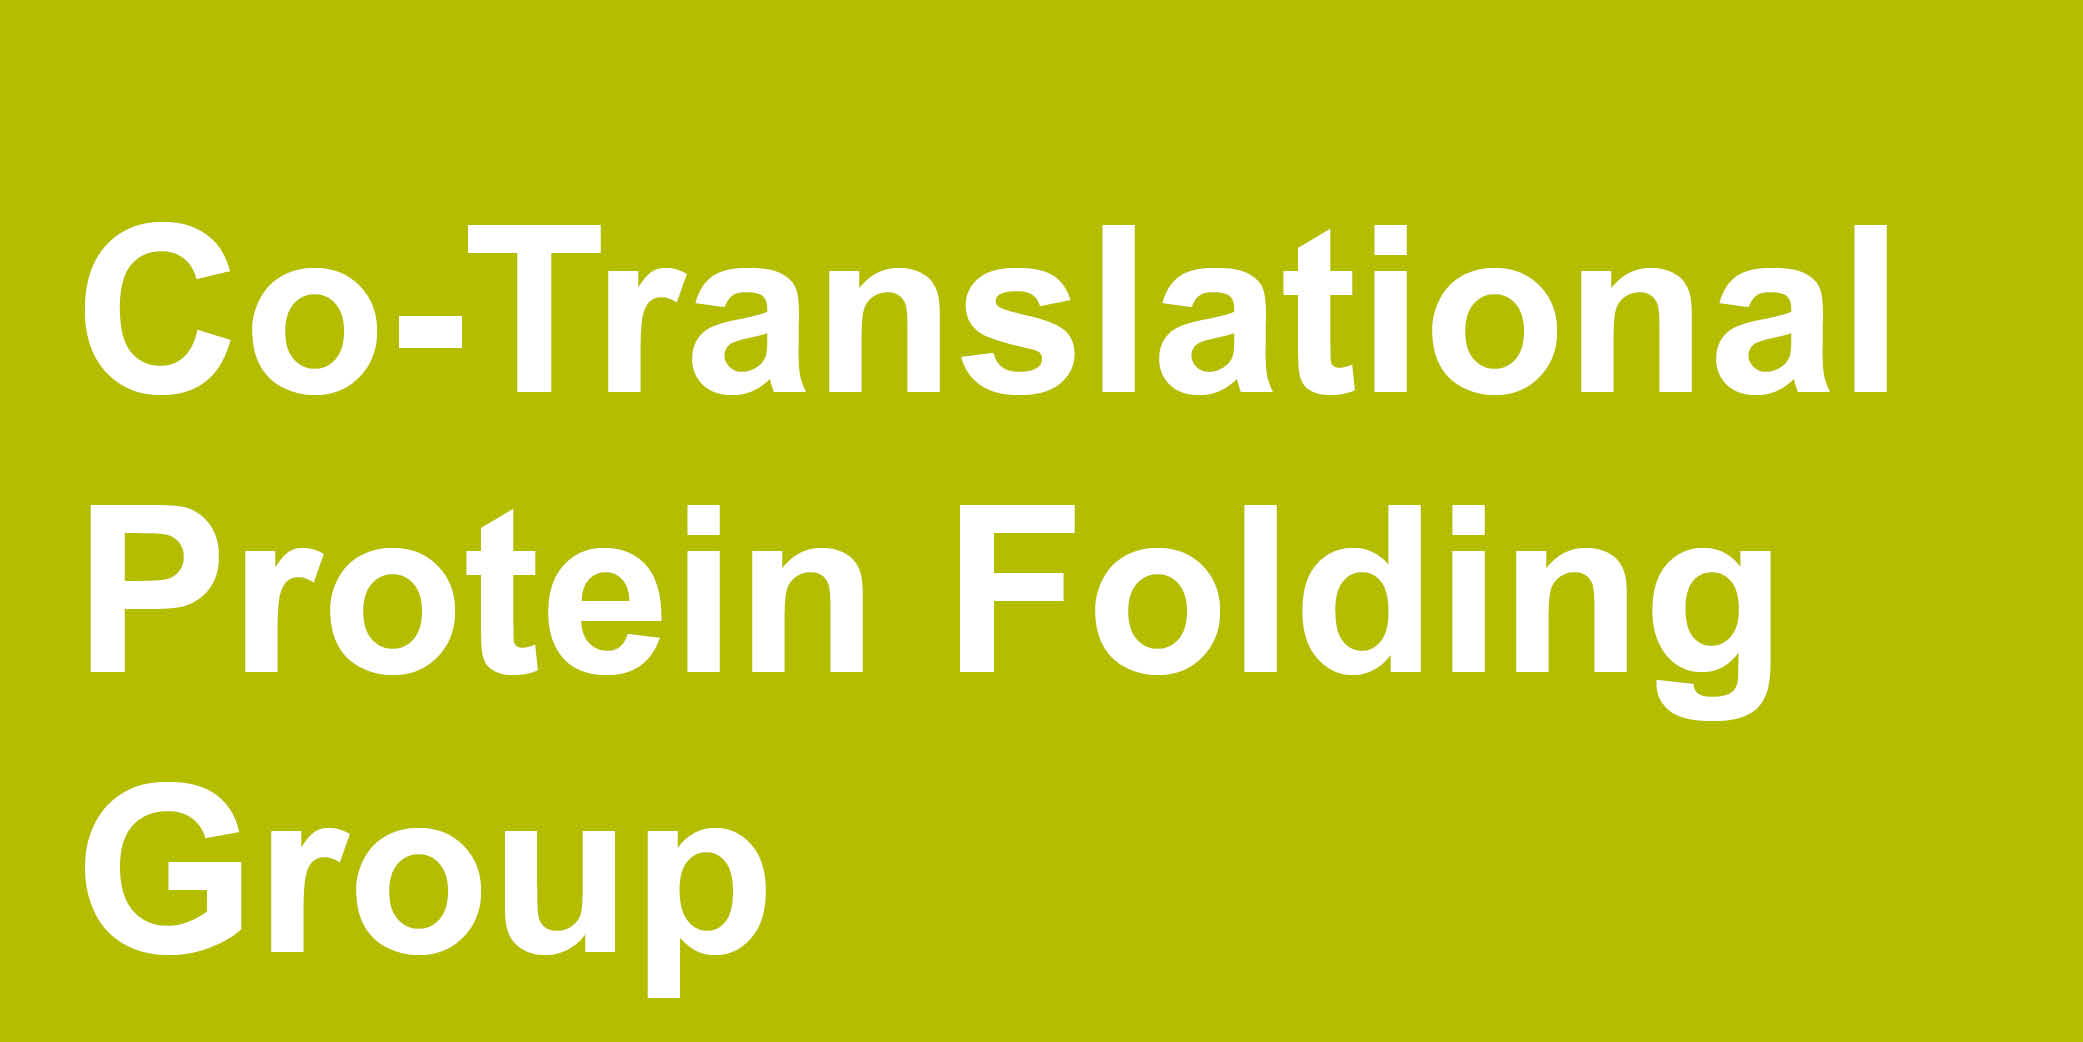 Co-Translational Protein Folding Group